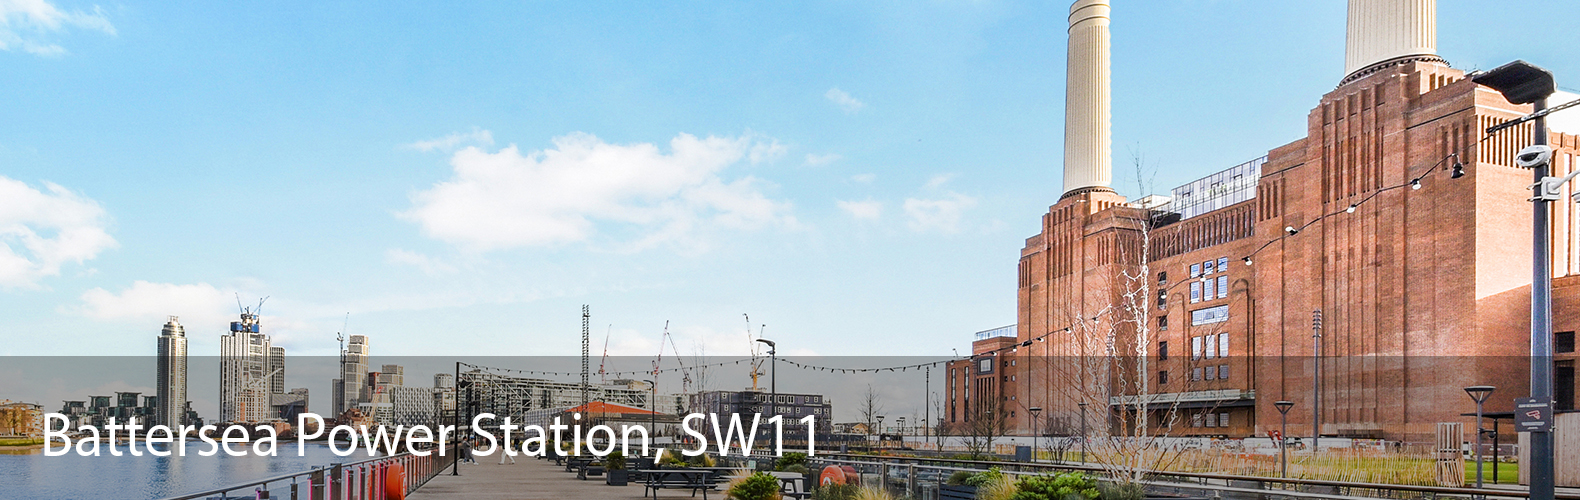 Battersea Power Station redevelopment